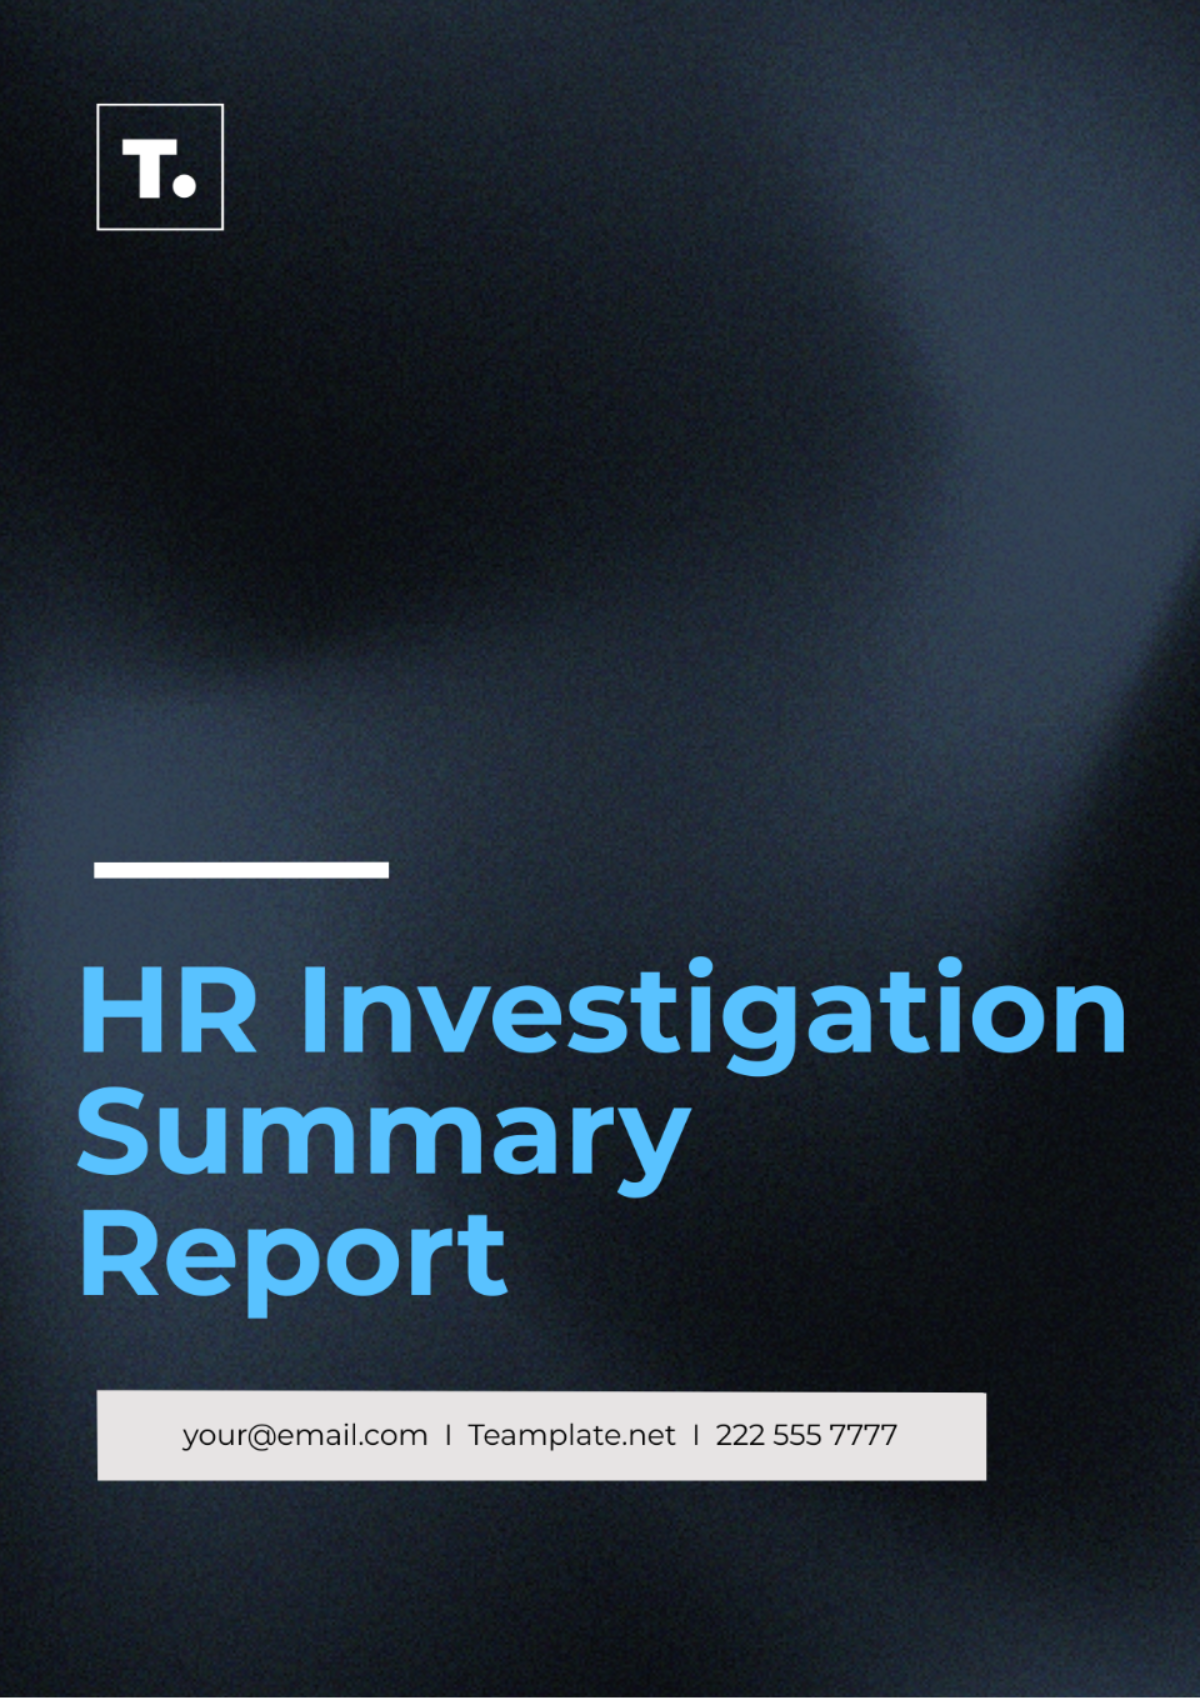 HR Investigation Summary Report Template